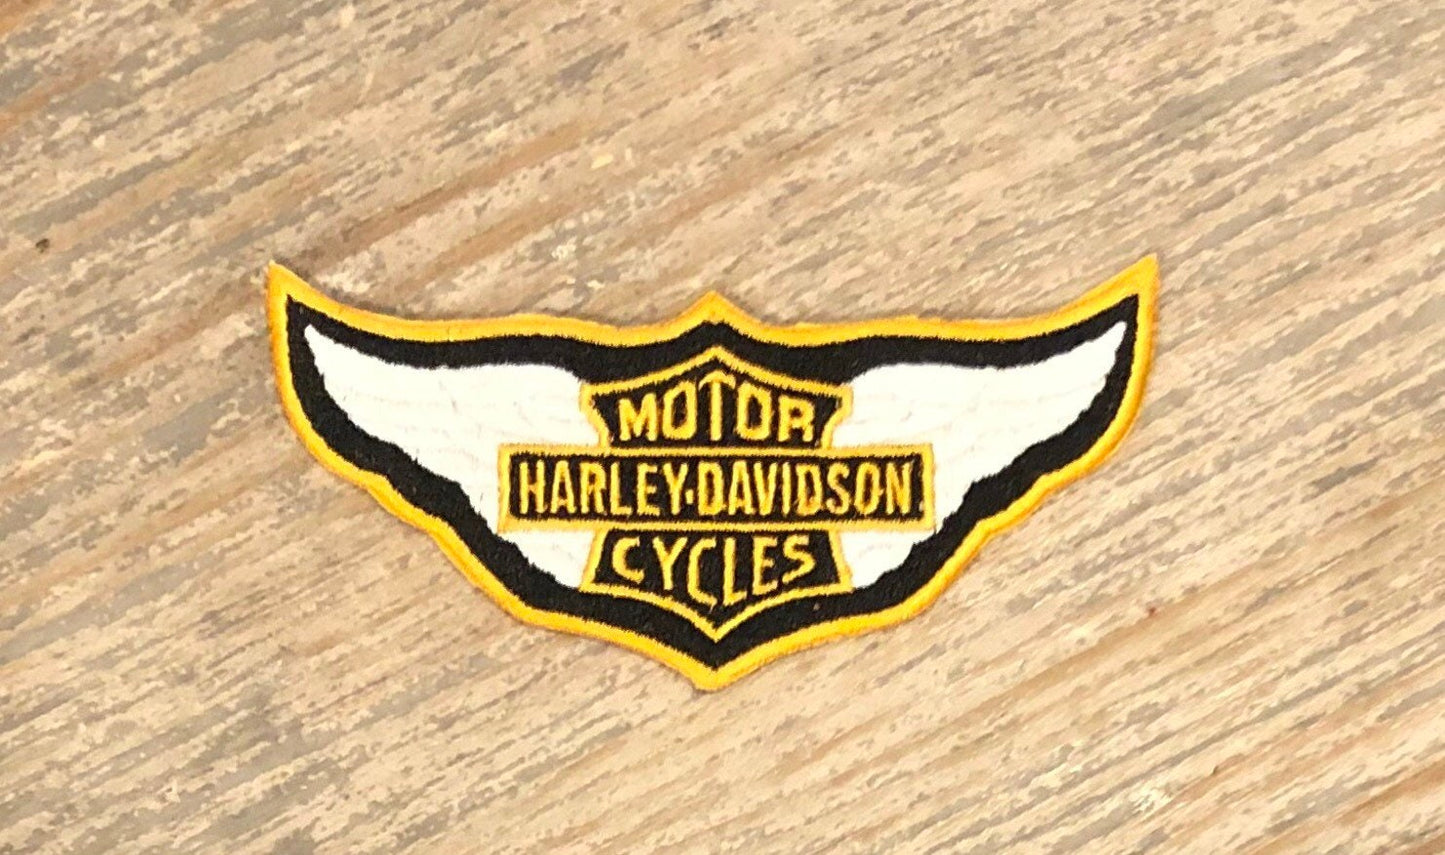 Harley Davidson Motorcycle Patch